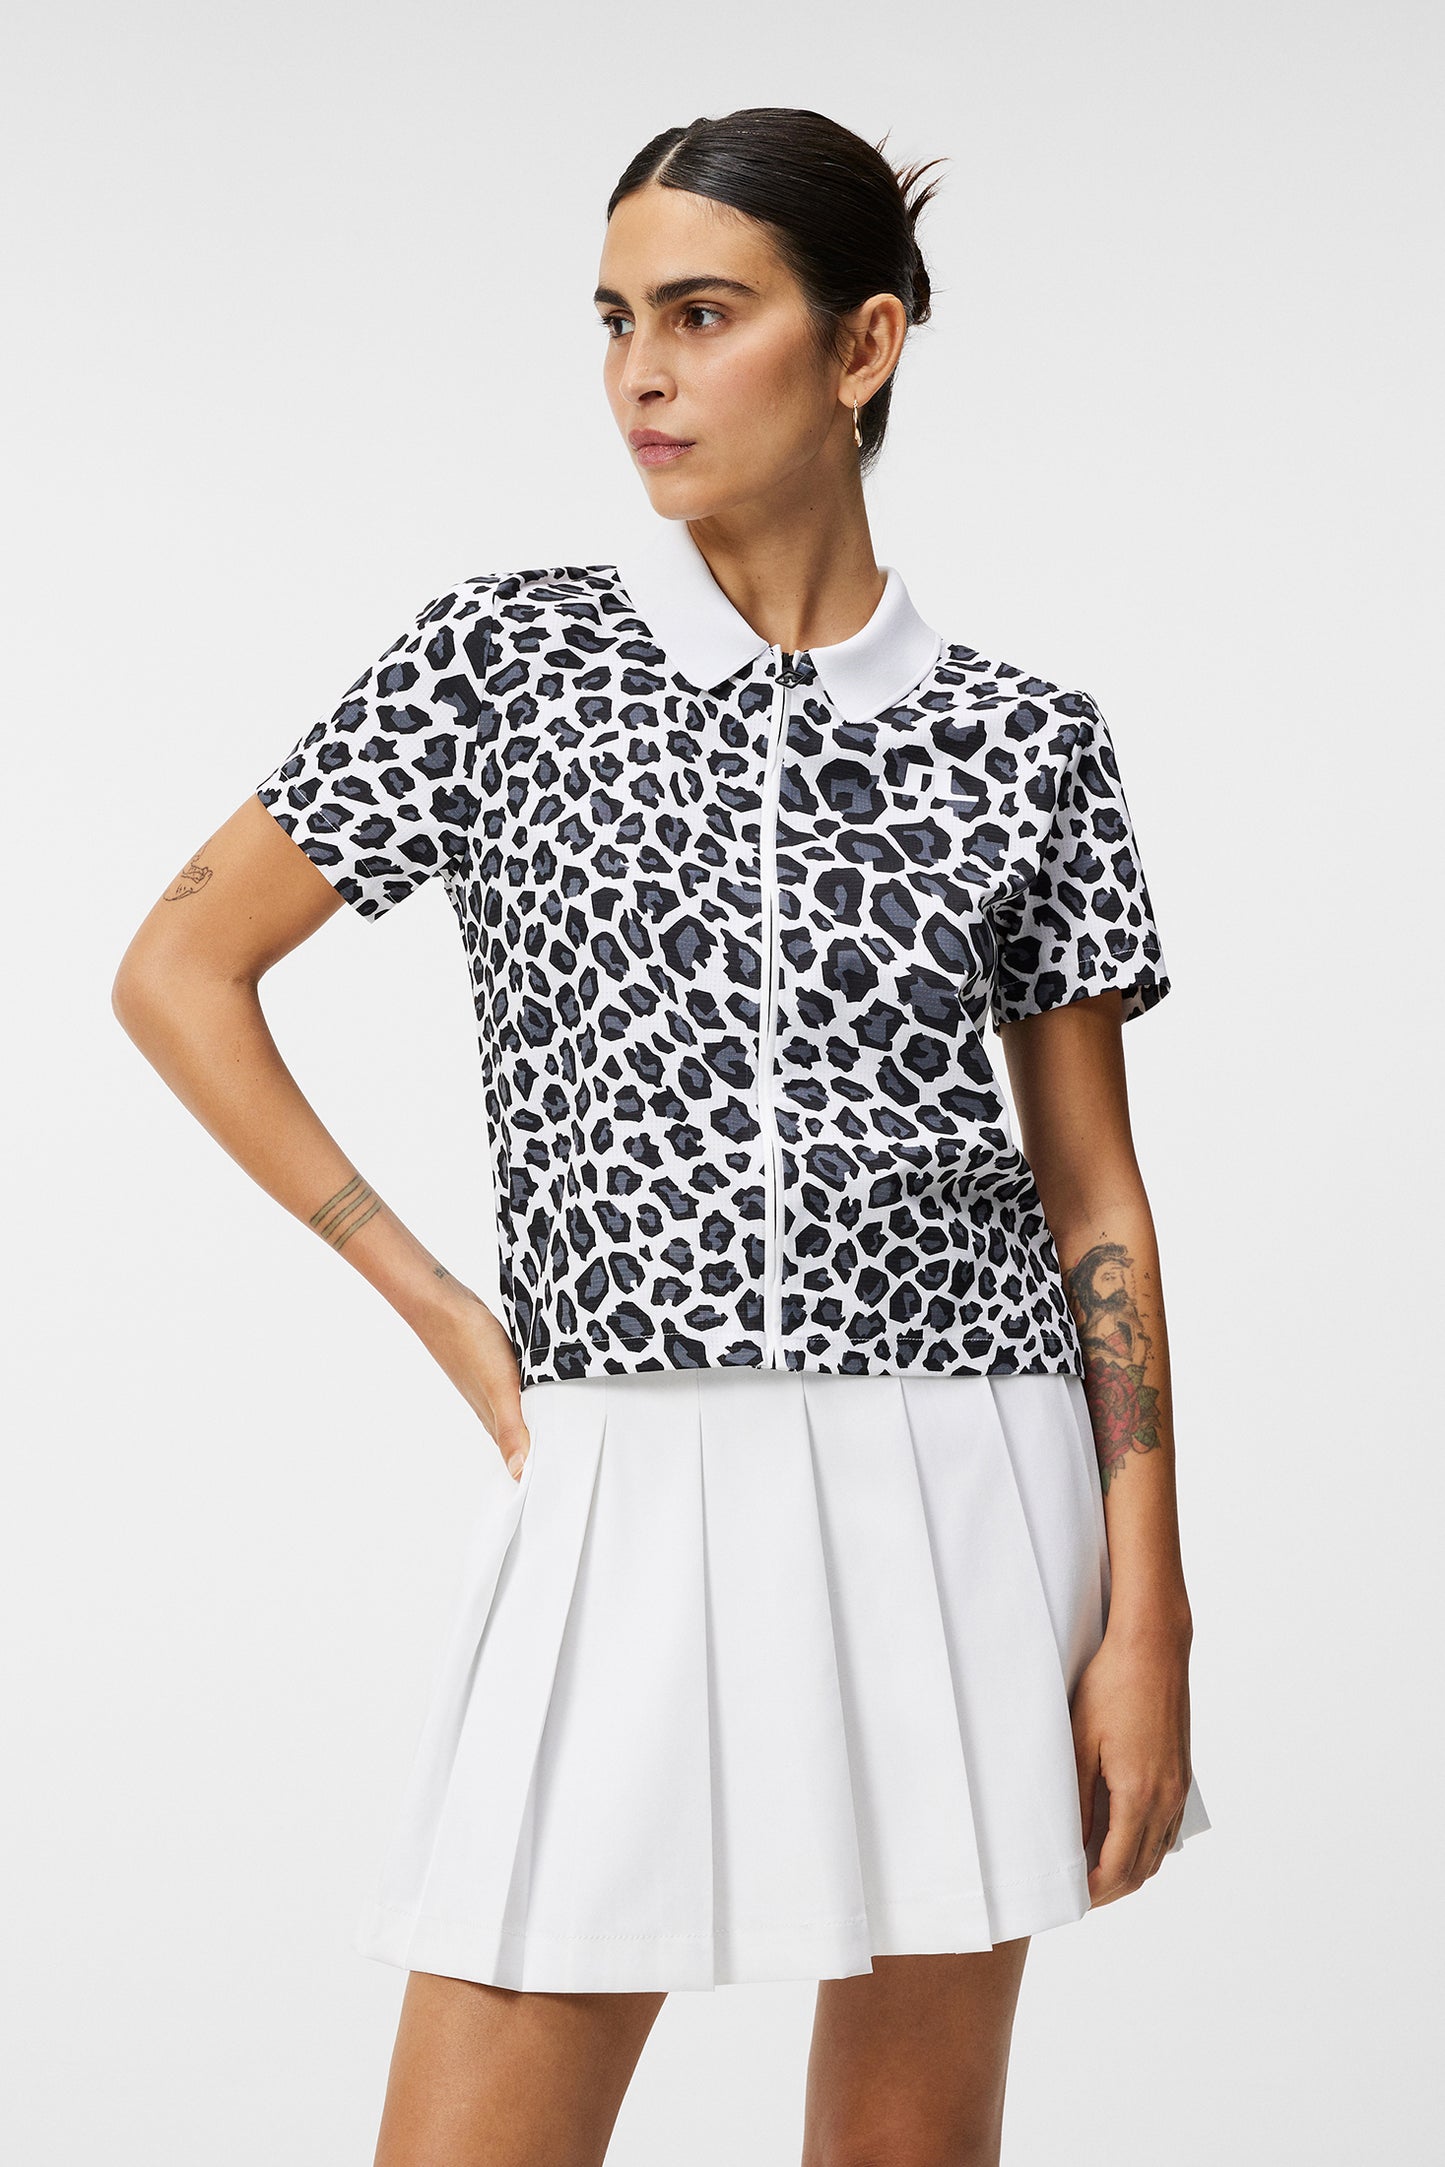 Violette Print Shirt / BW Leopard